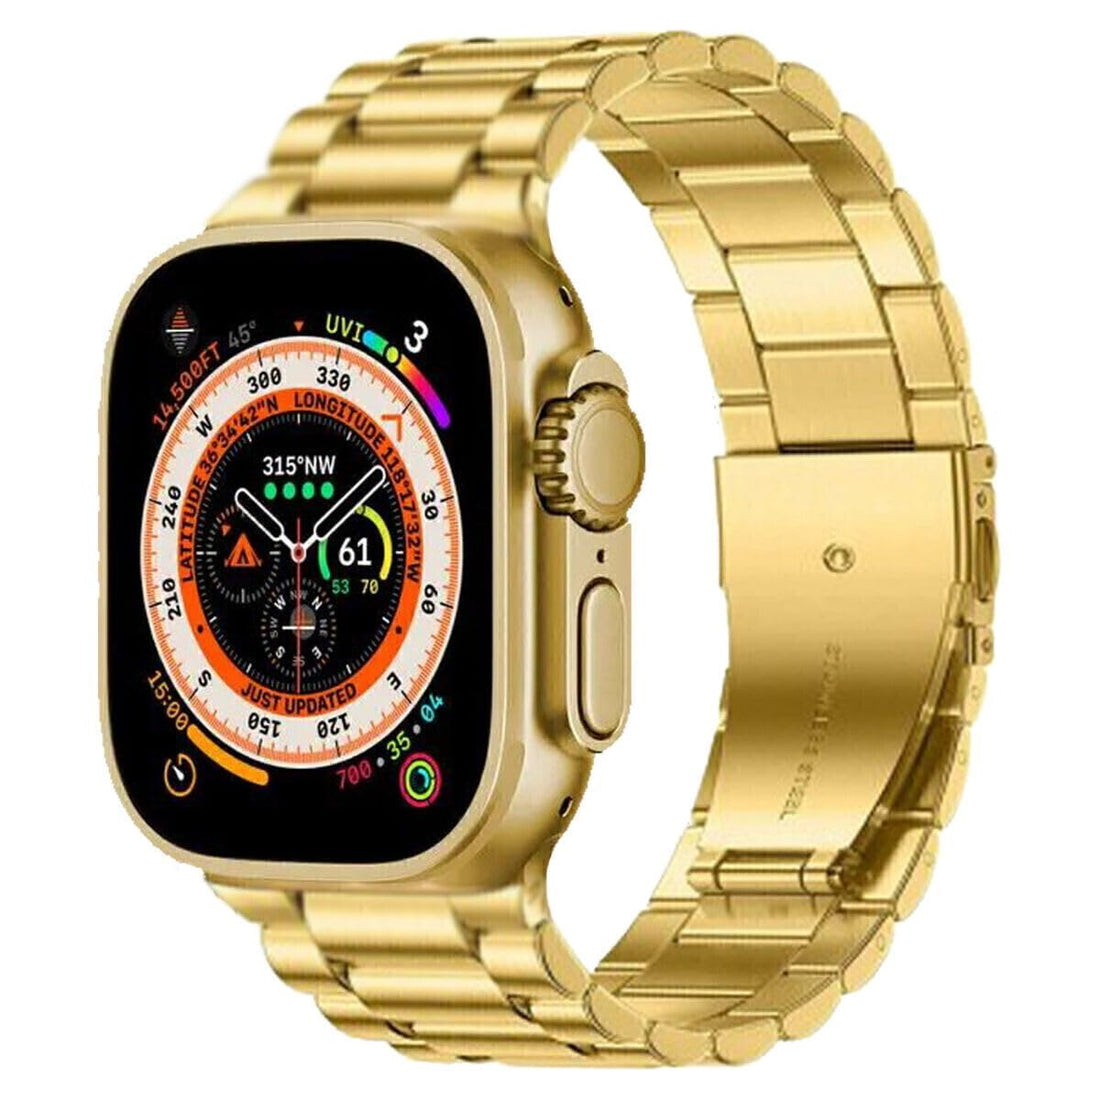 HK 9Ultra Smart Watch Gold Edition